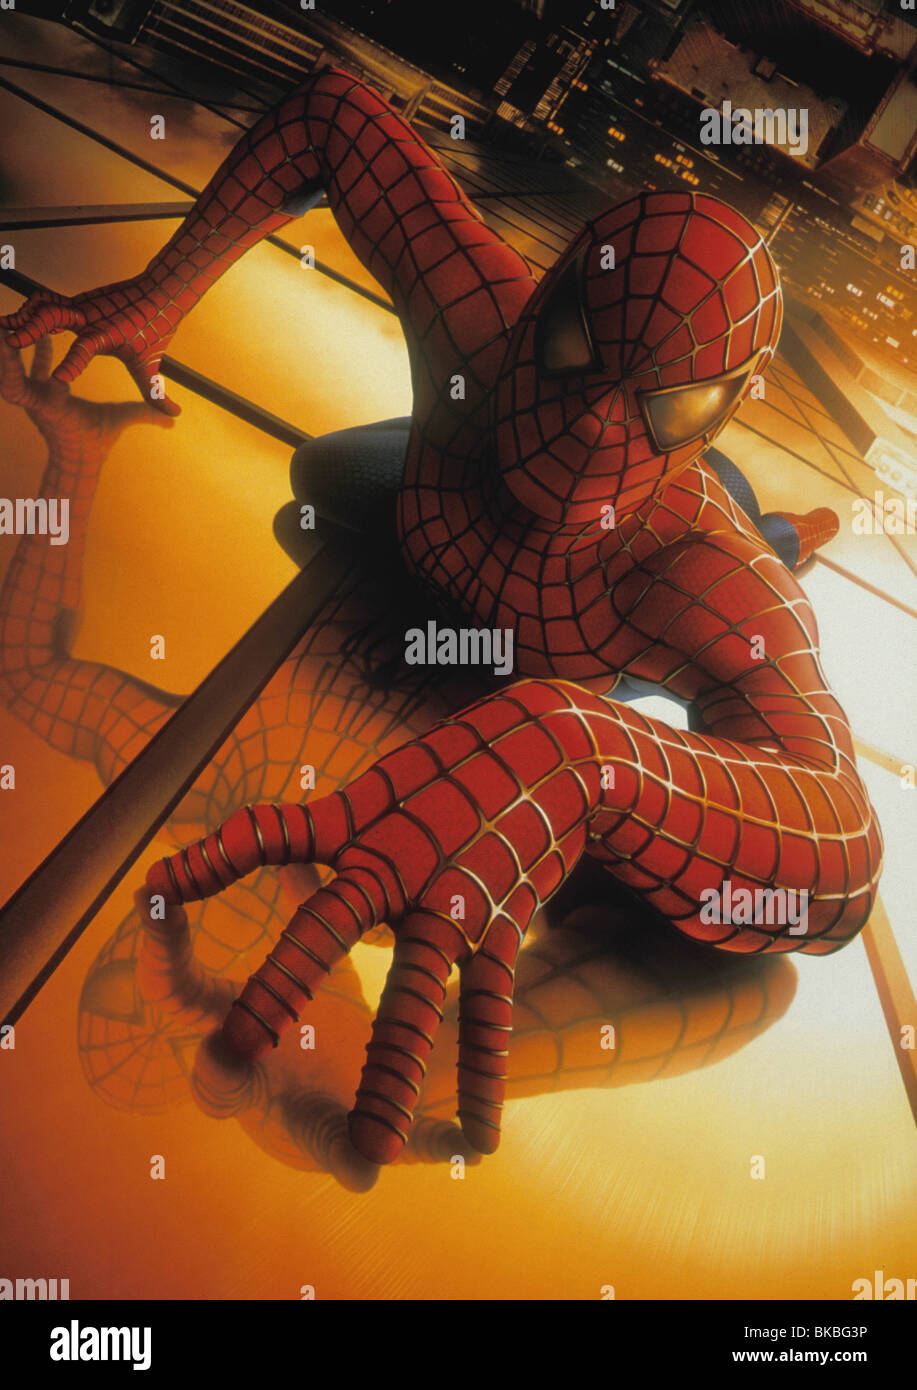 SPIDER-Man (2002), Spiderman (ALT) Póster SPDR 009 Fotografía de stock -  Alamy